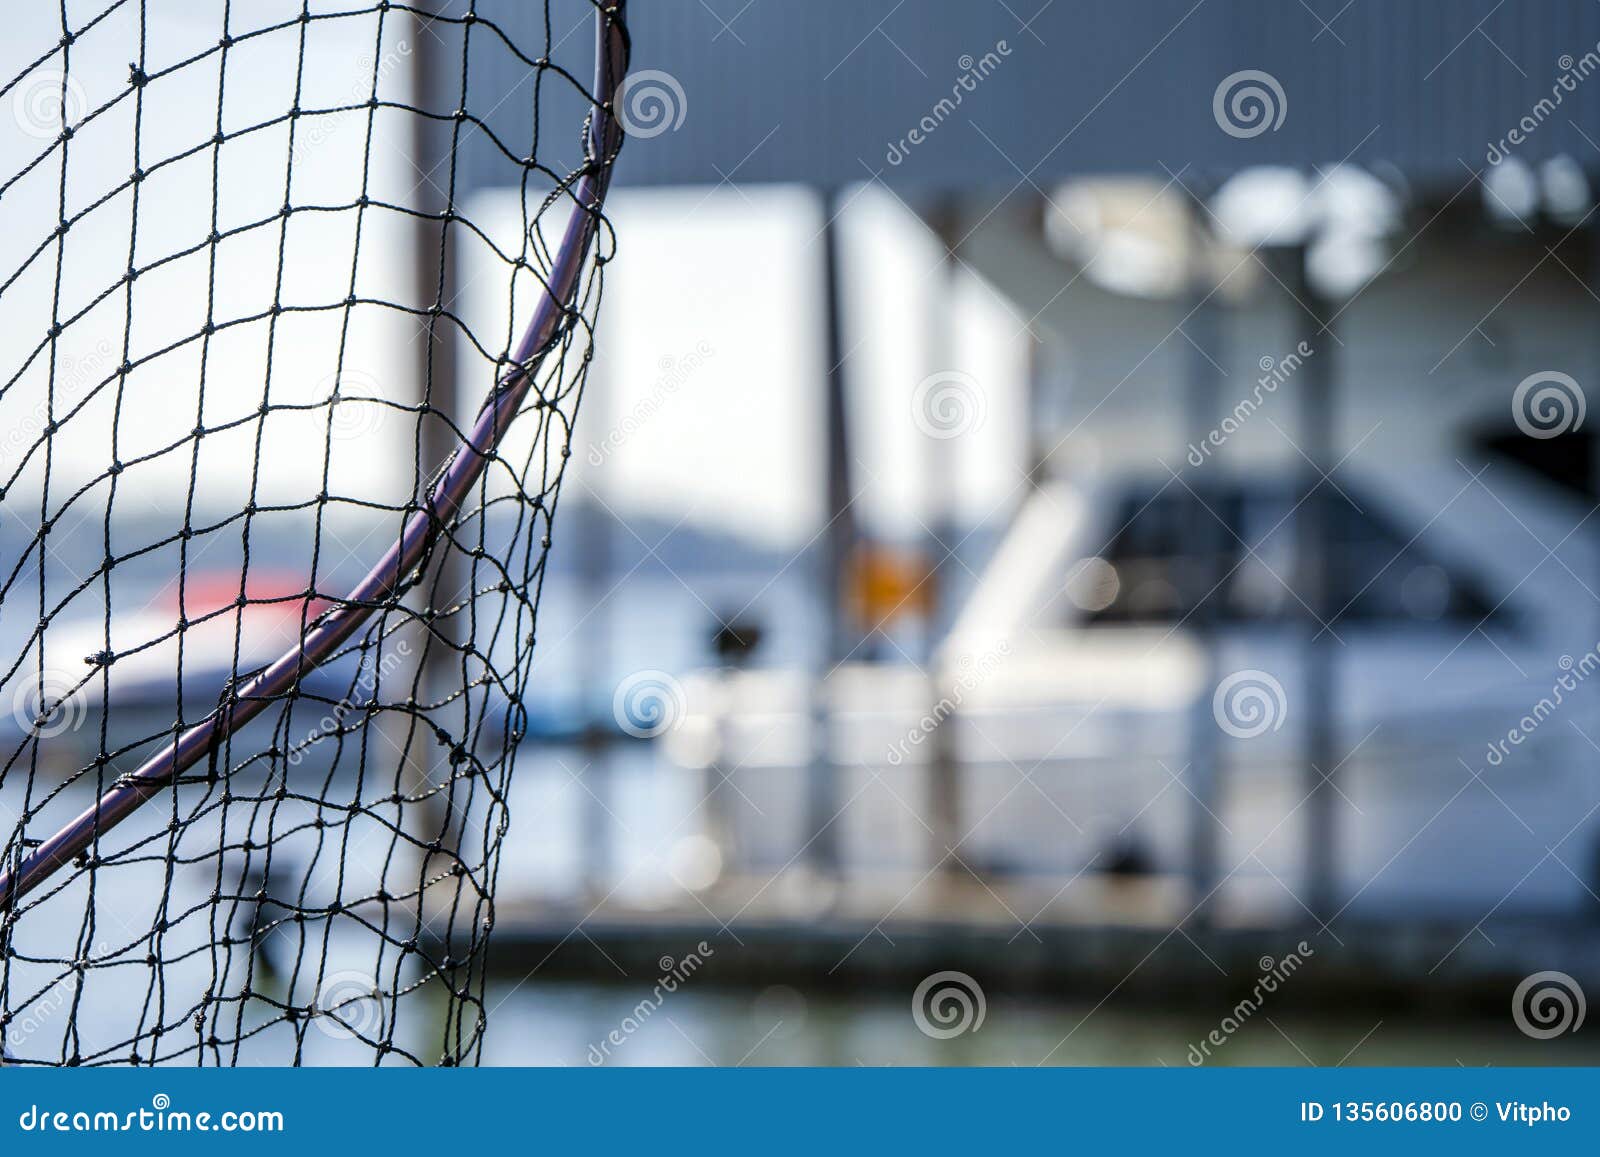 https://thumbs.dreamstime.com/z/netting-net-fishing-bay-catching-fish-made-wicker-mesh-worn-metal-frame-handle-ease-use-against-135606800.jpg